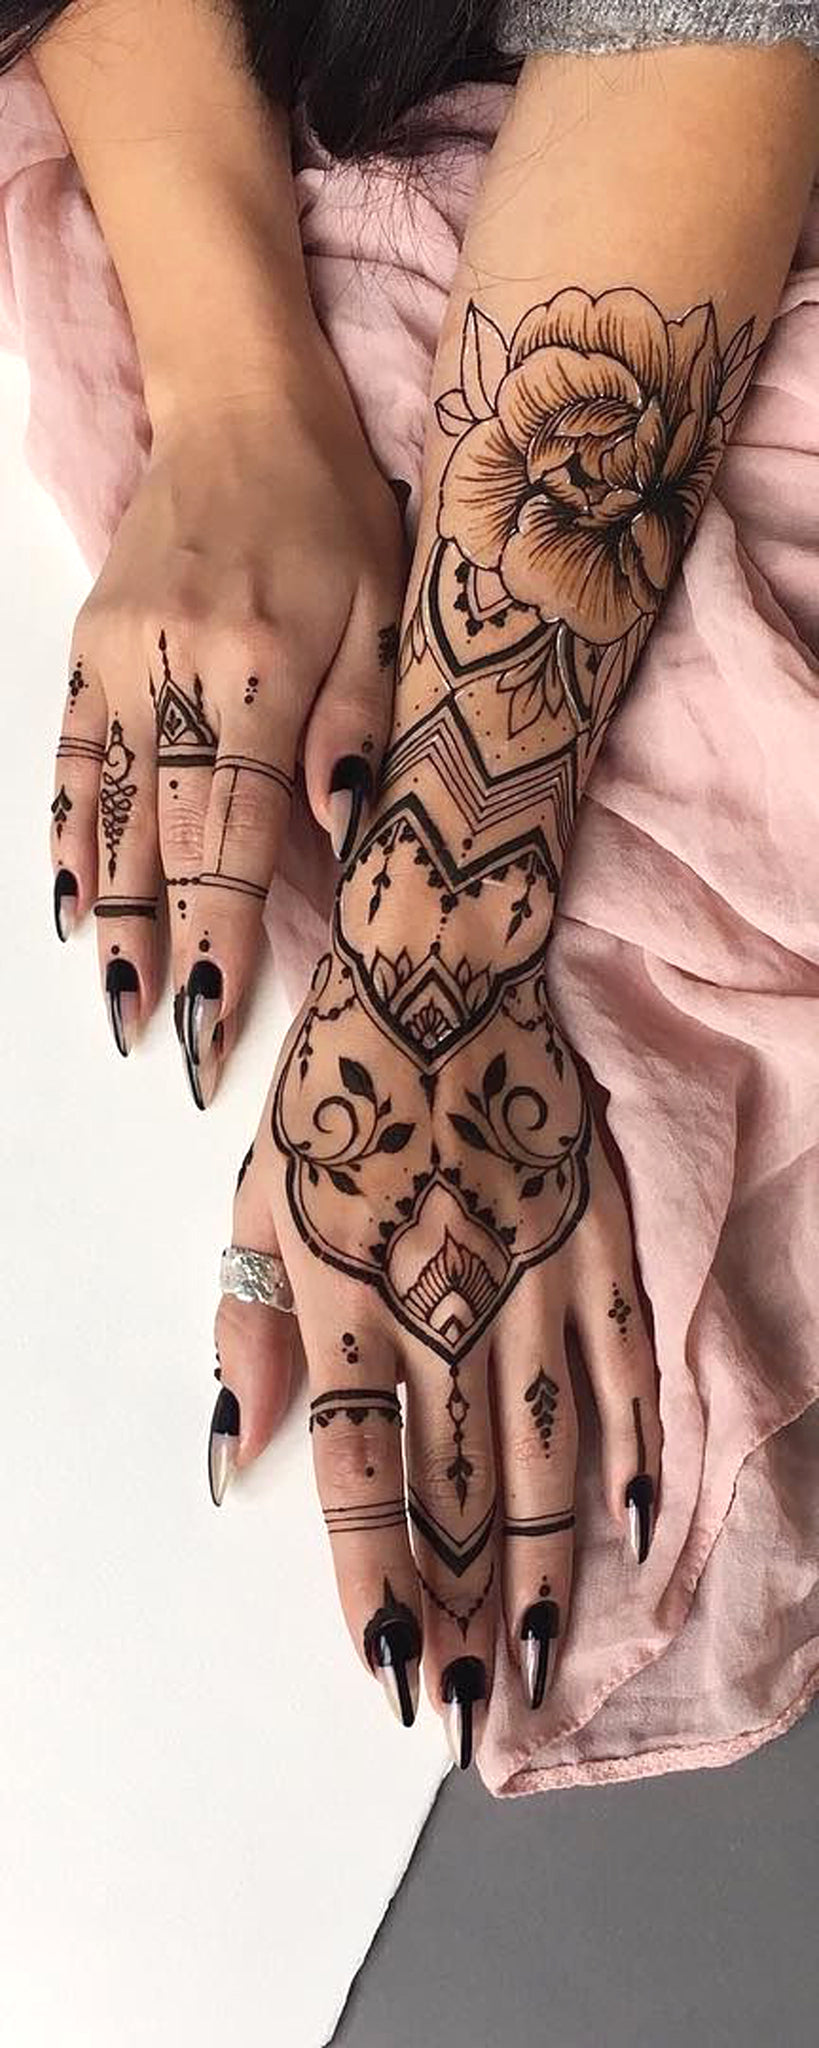 Black Henna Tribal Bohemian Hand Tattoo Ideas for Women - Realistic Rose Forearm Tat -  ideas de tatuaje de antebrazo rosa para mujeres - www.MyBodiArt.com 